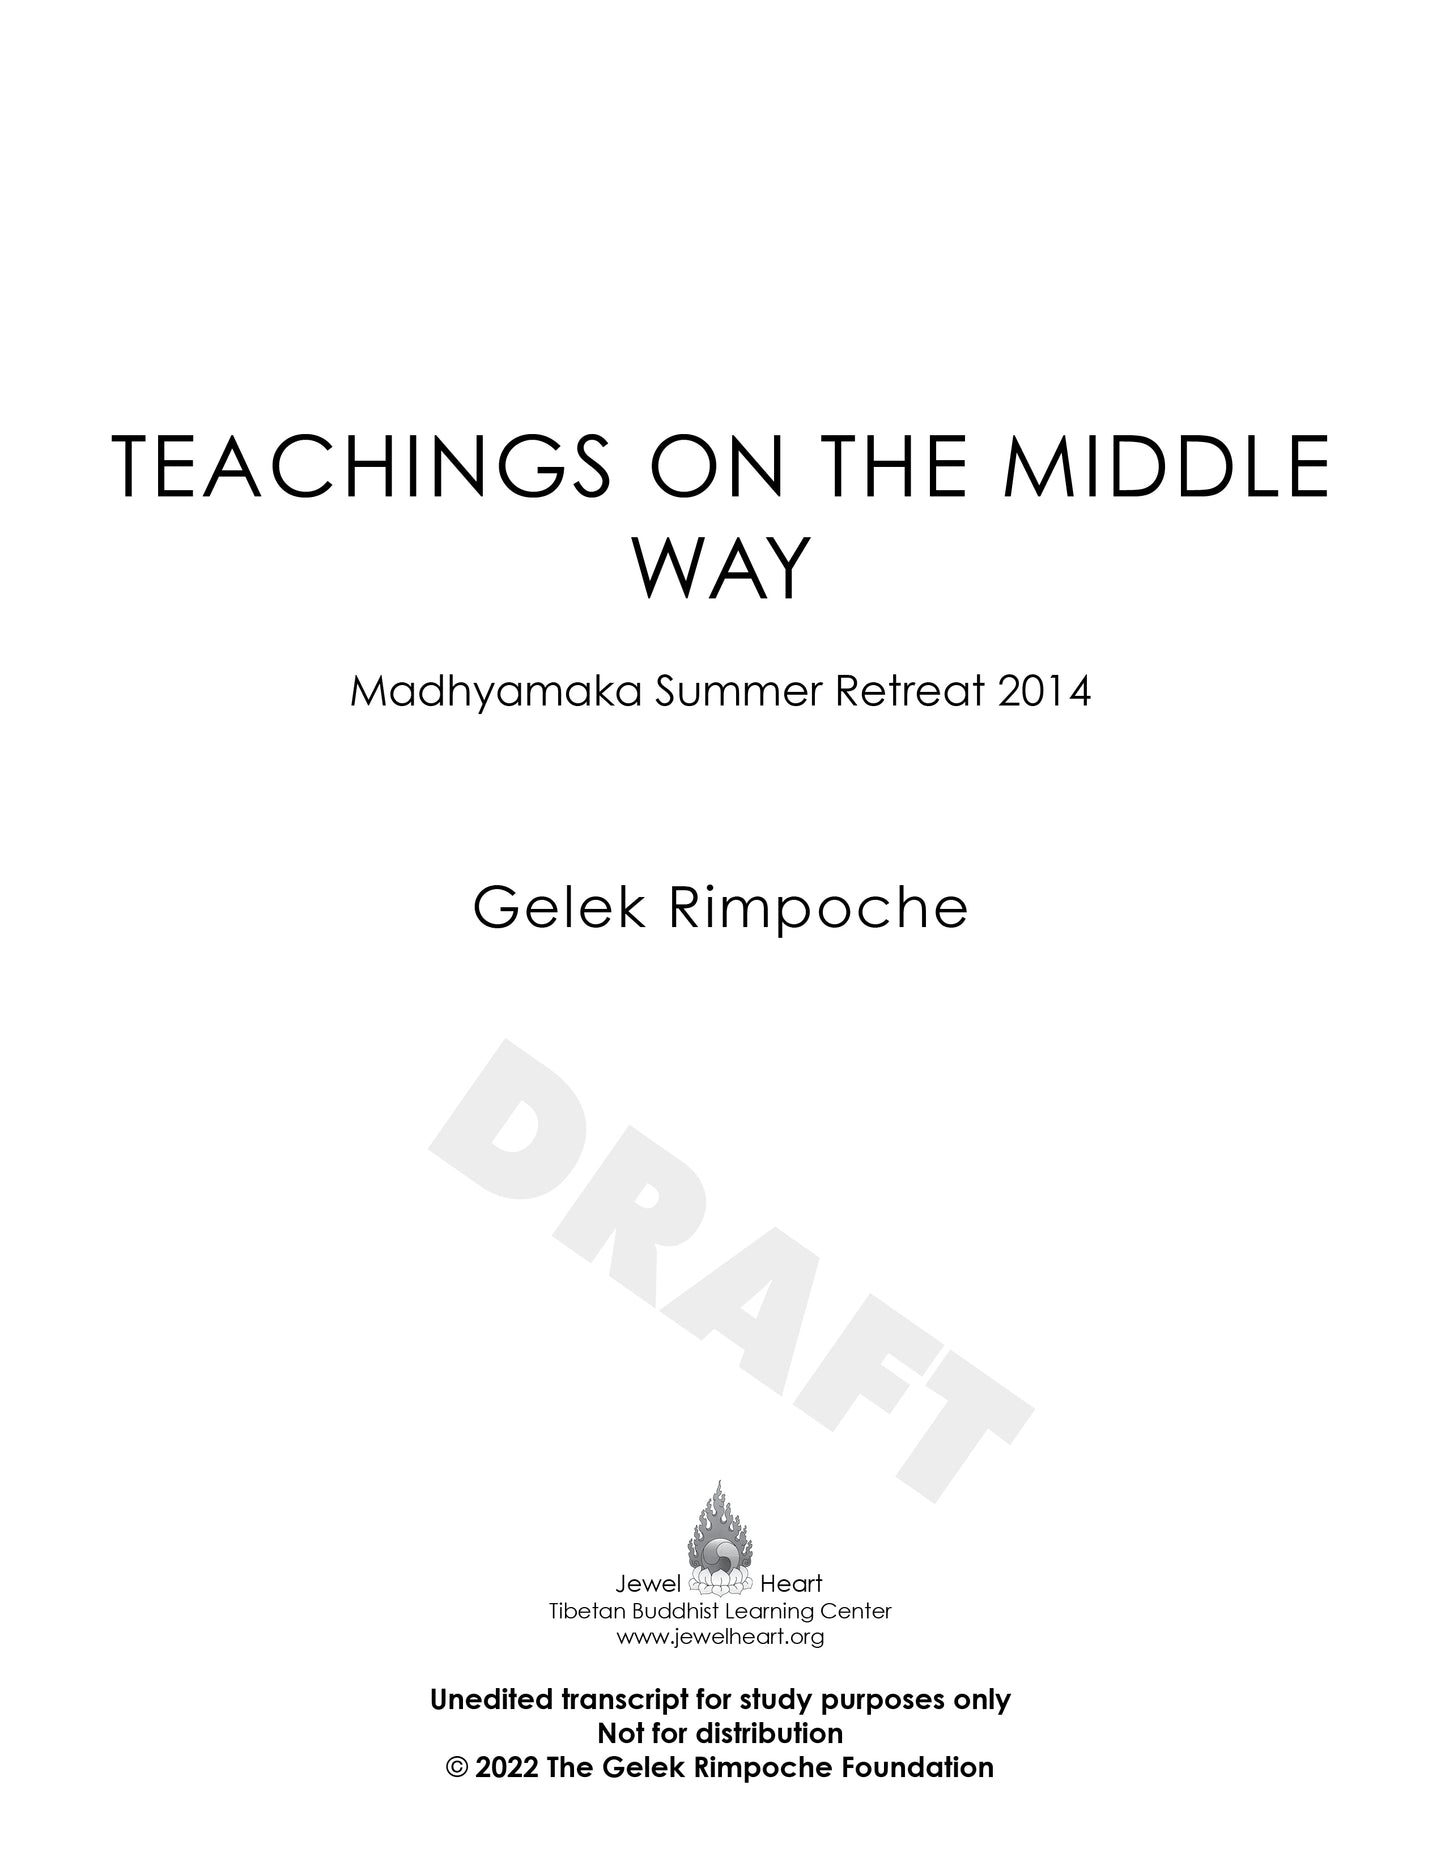 Teachings on the Middle Way: Madhyamaka Summer Retreat 2014